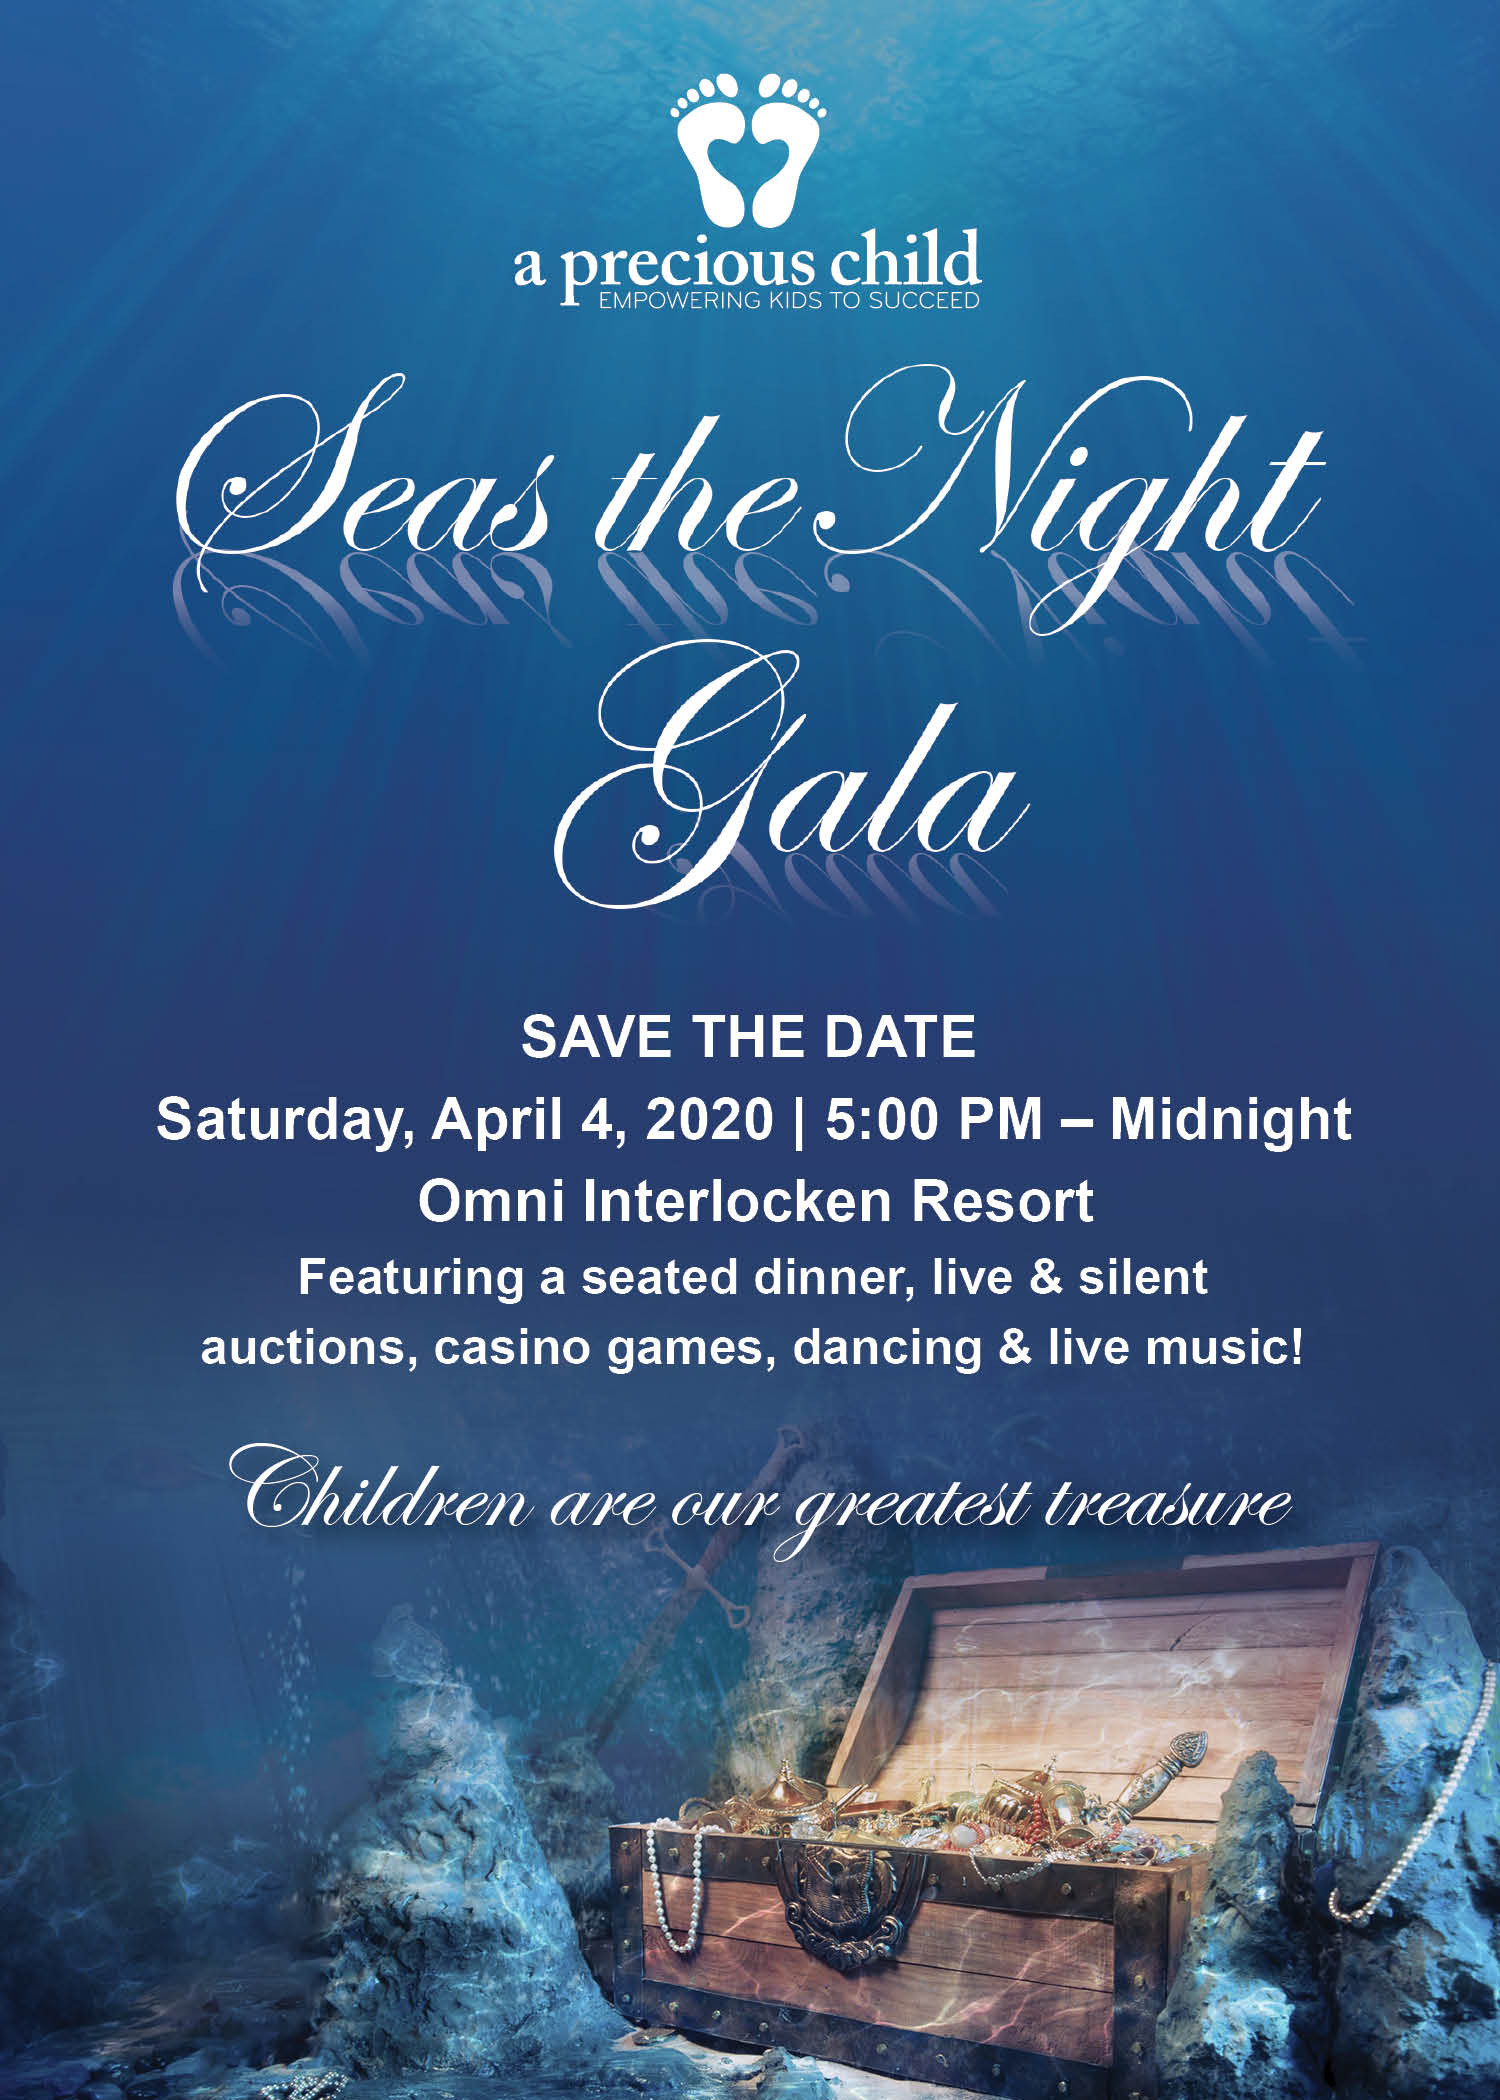 A Precious Child Seas the Night Gala